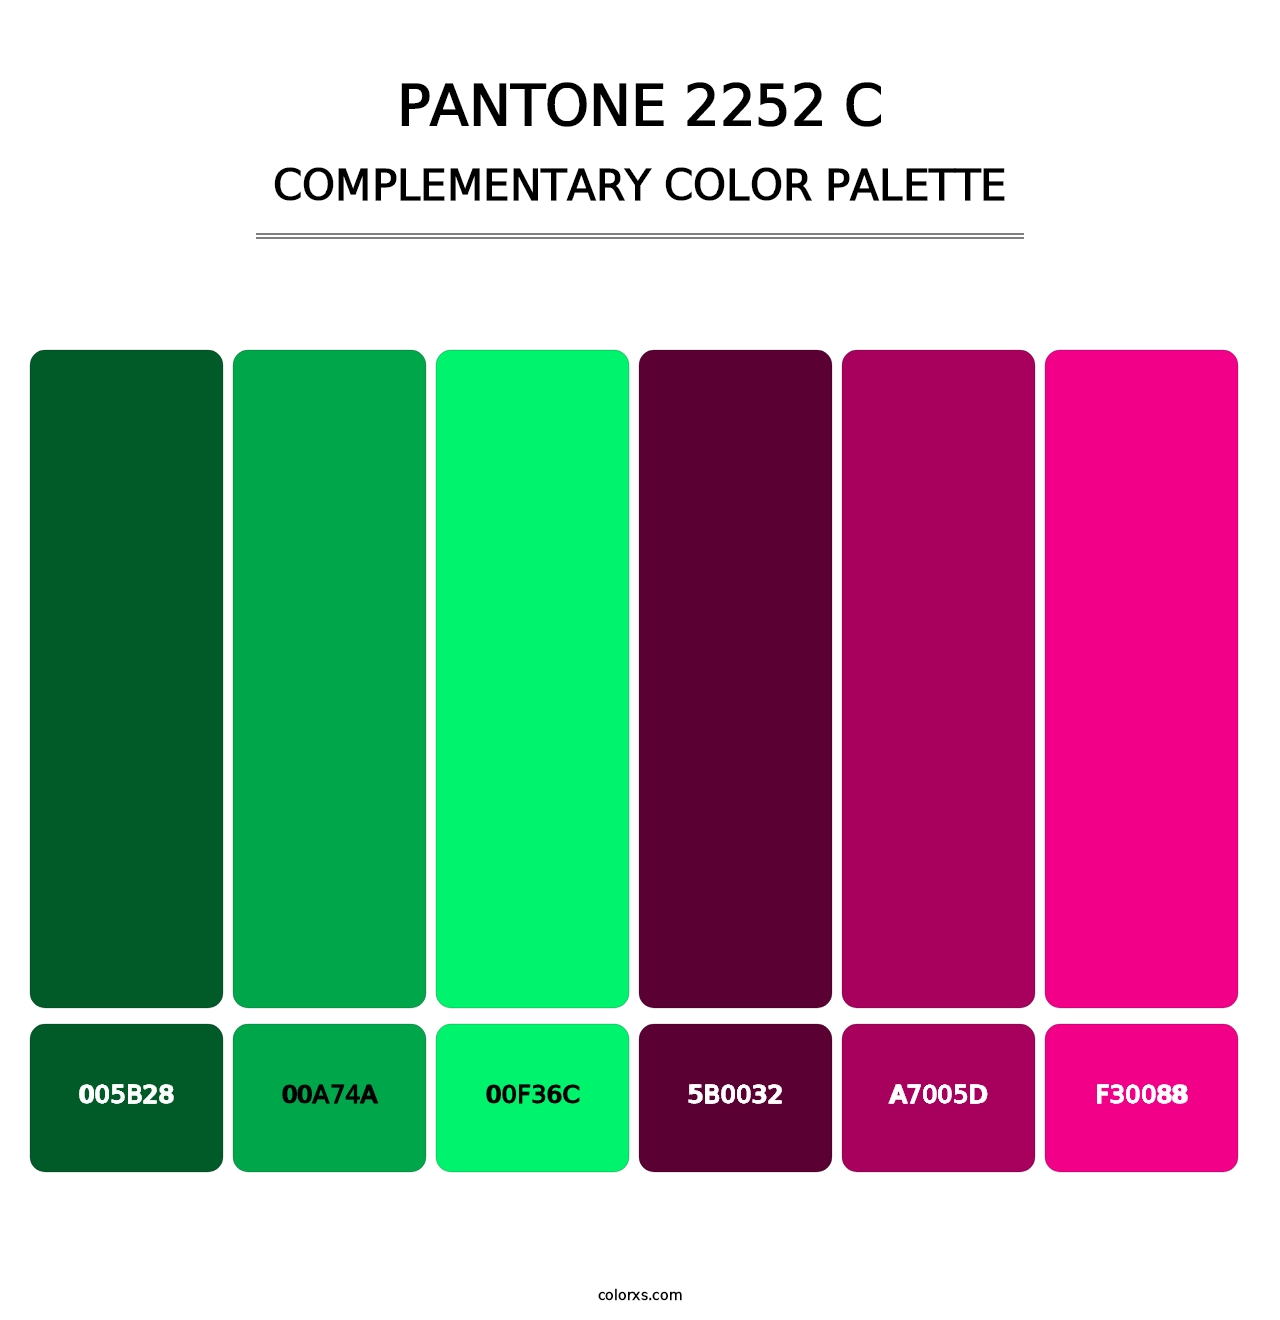 PANTONE 2252 C - Complementary Color Palette